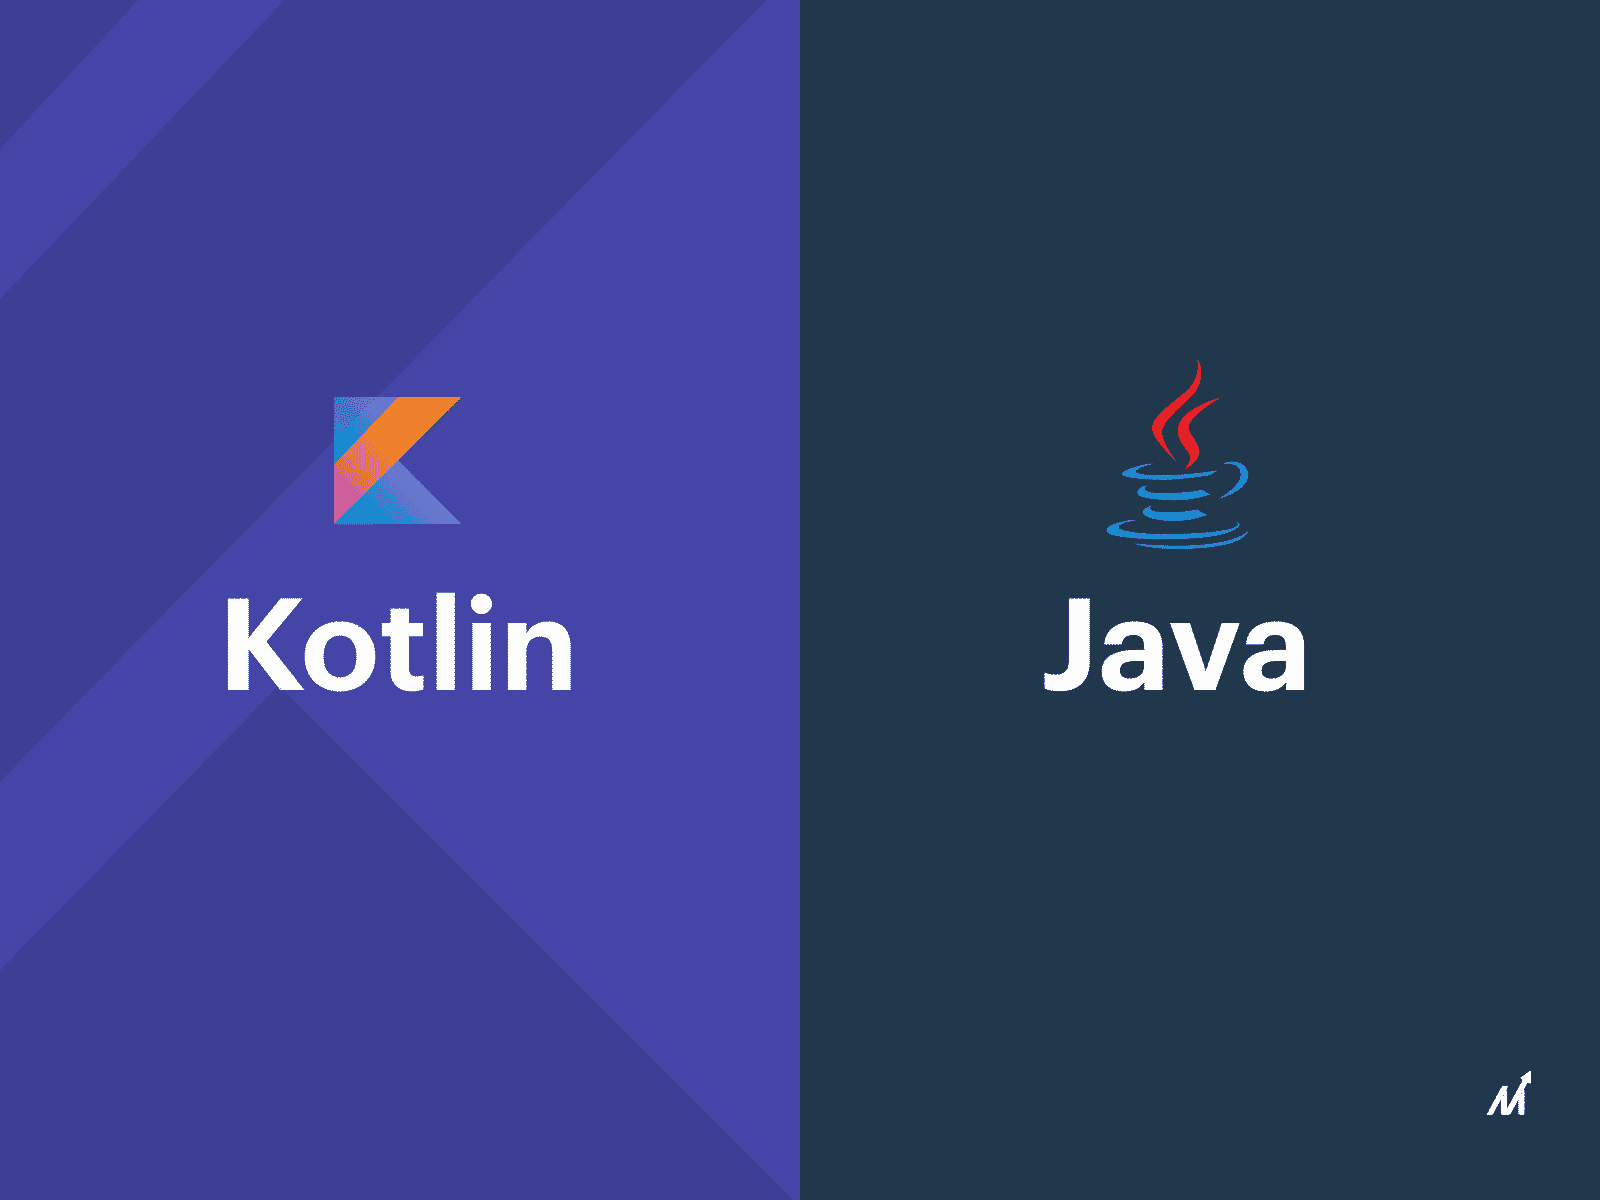 Kotlin vs Java - feature image